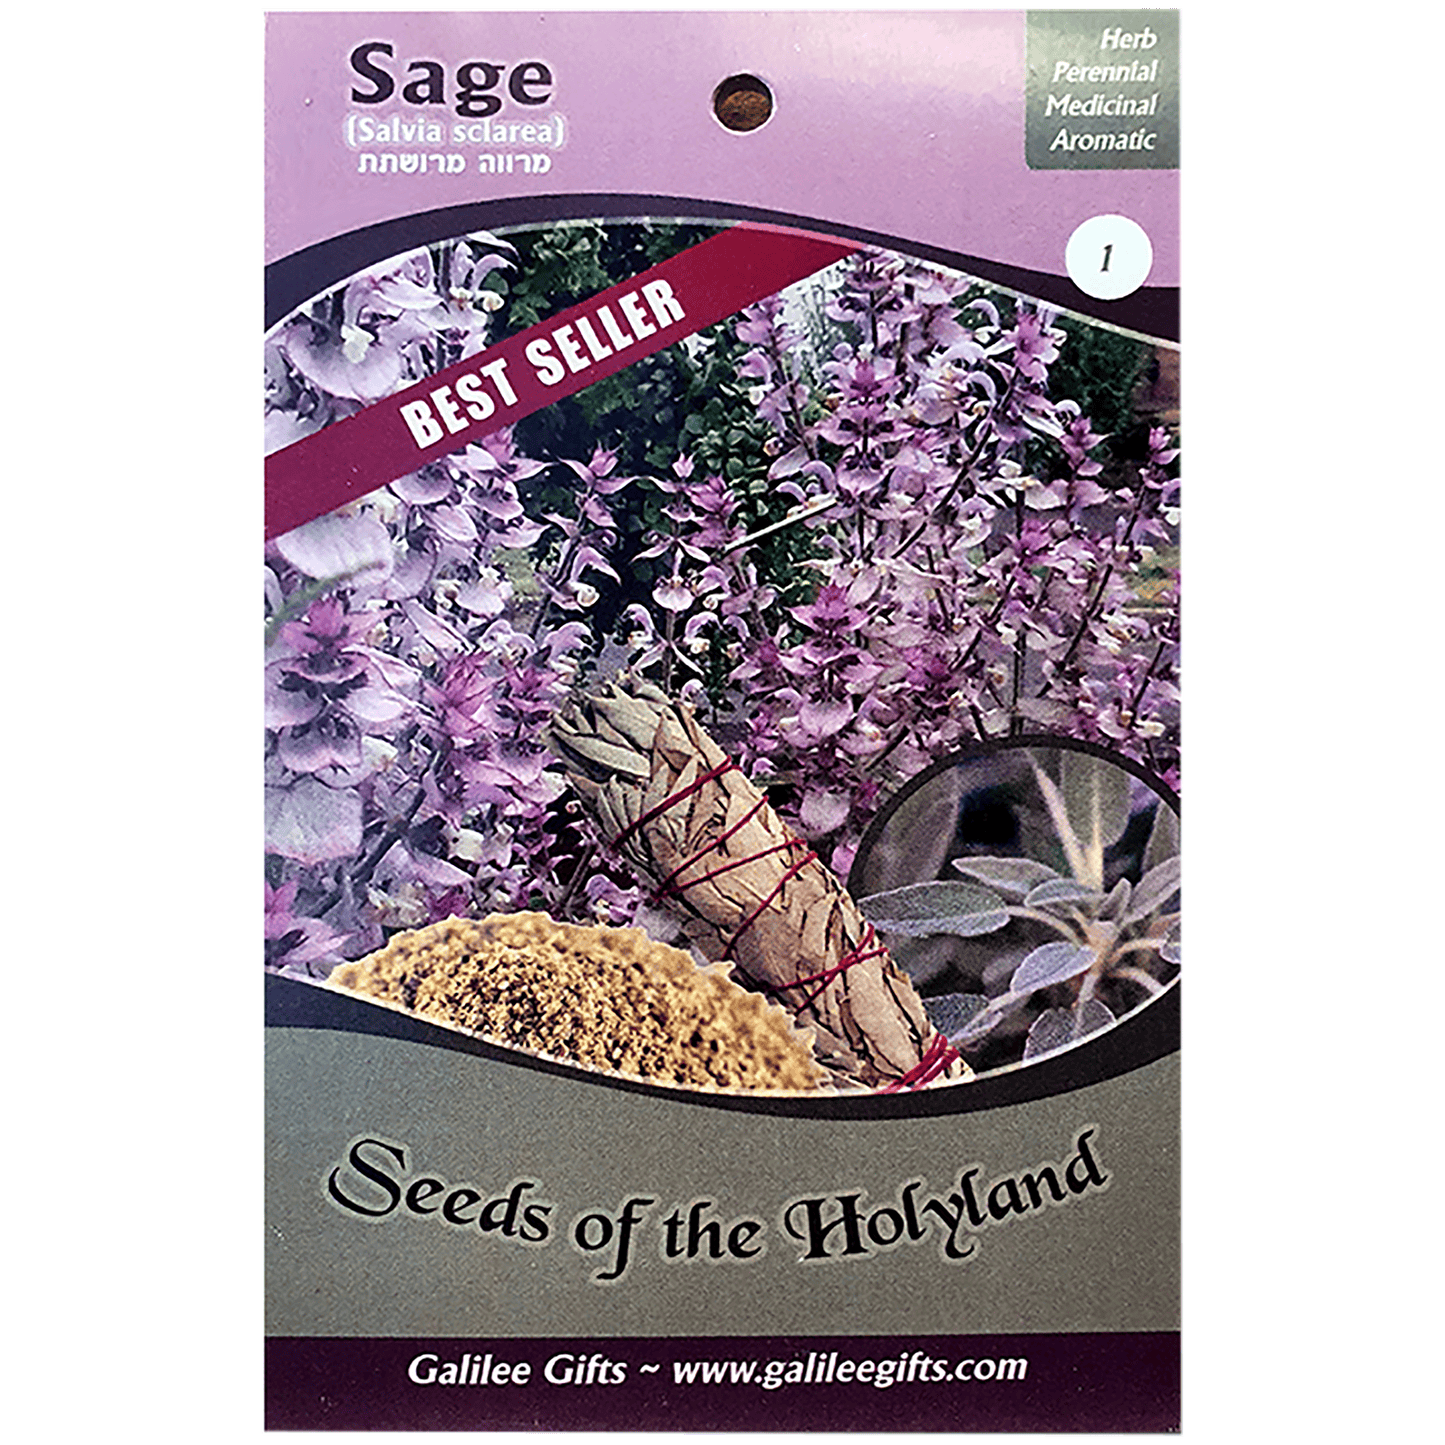 Sage Holyland Seeds